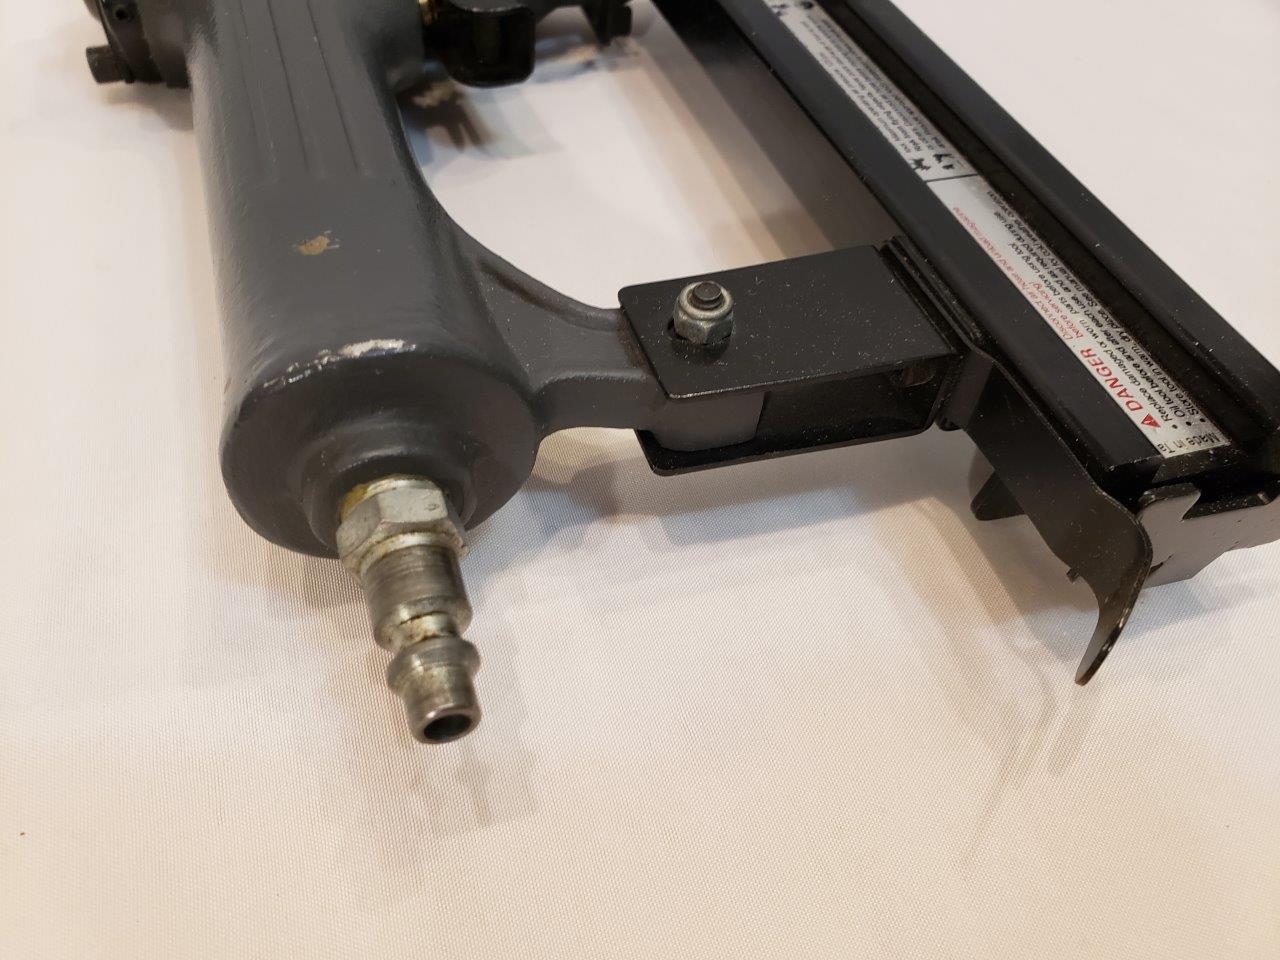 18 Gauge Brad Air Nailer, DeVilbiss Nail Gun Pneumatic fastener